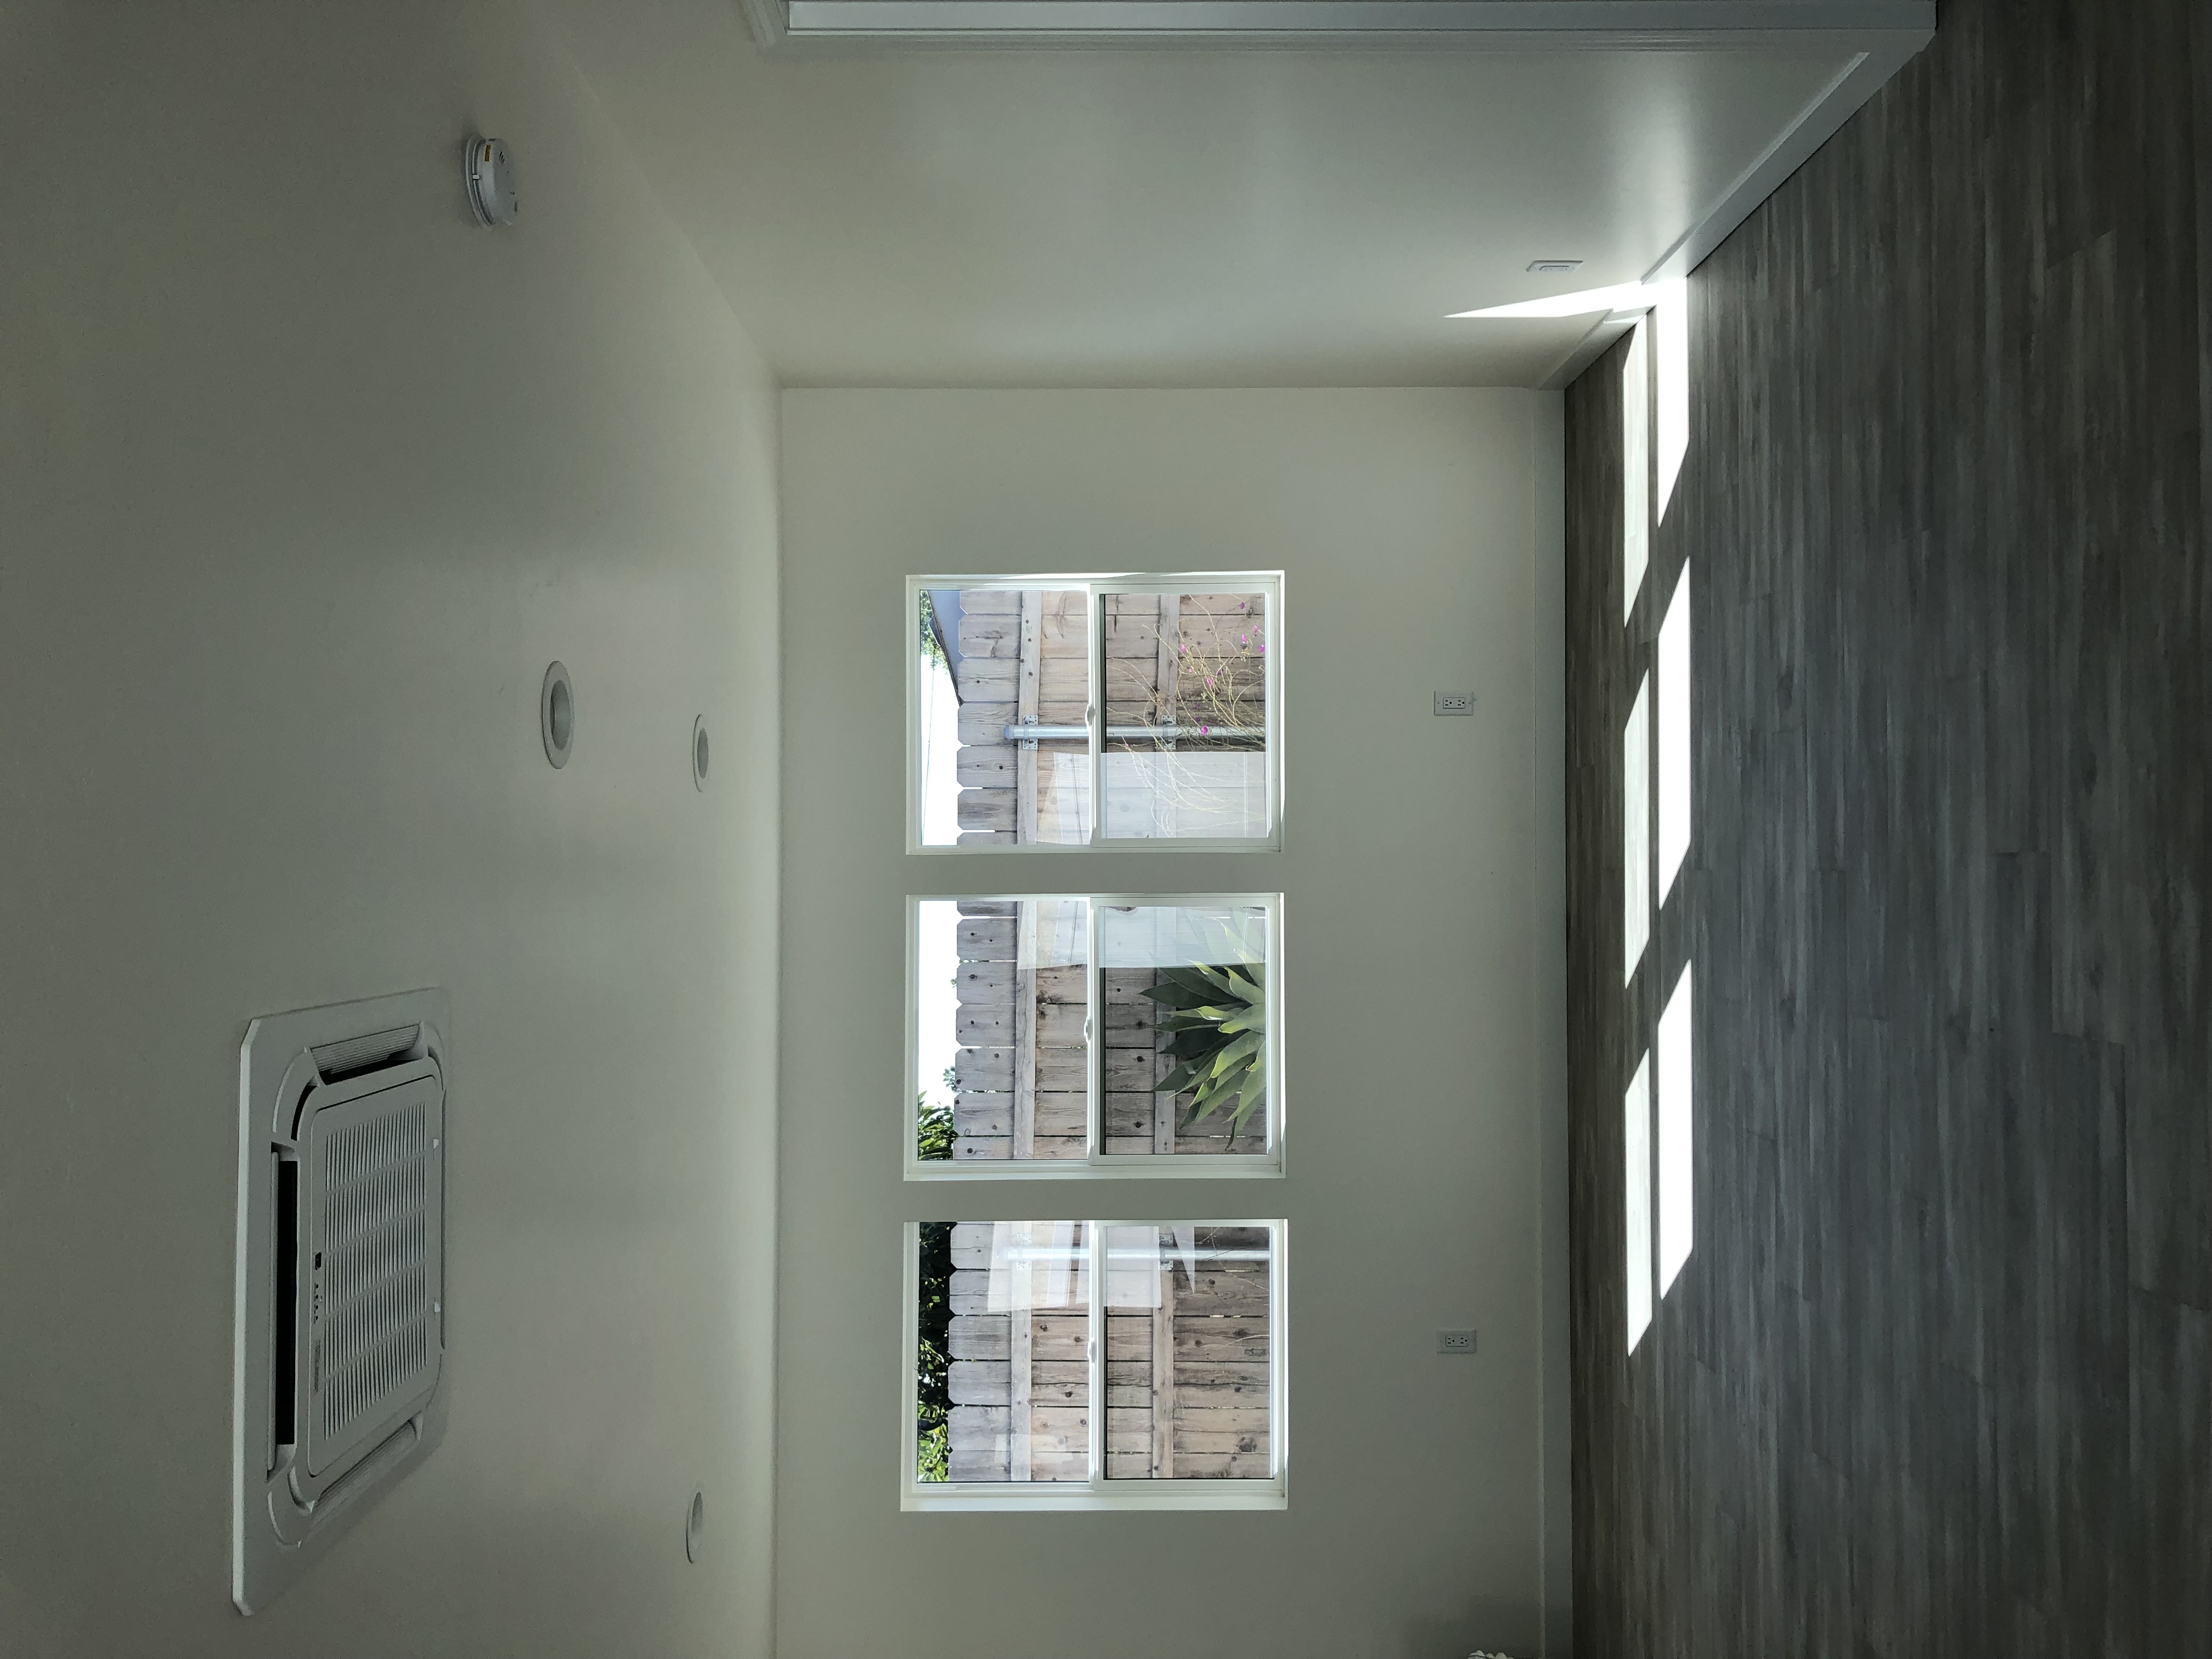 vinyl-windows-side-by-side-in-new-bedroom-for-new-ADU